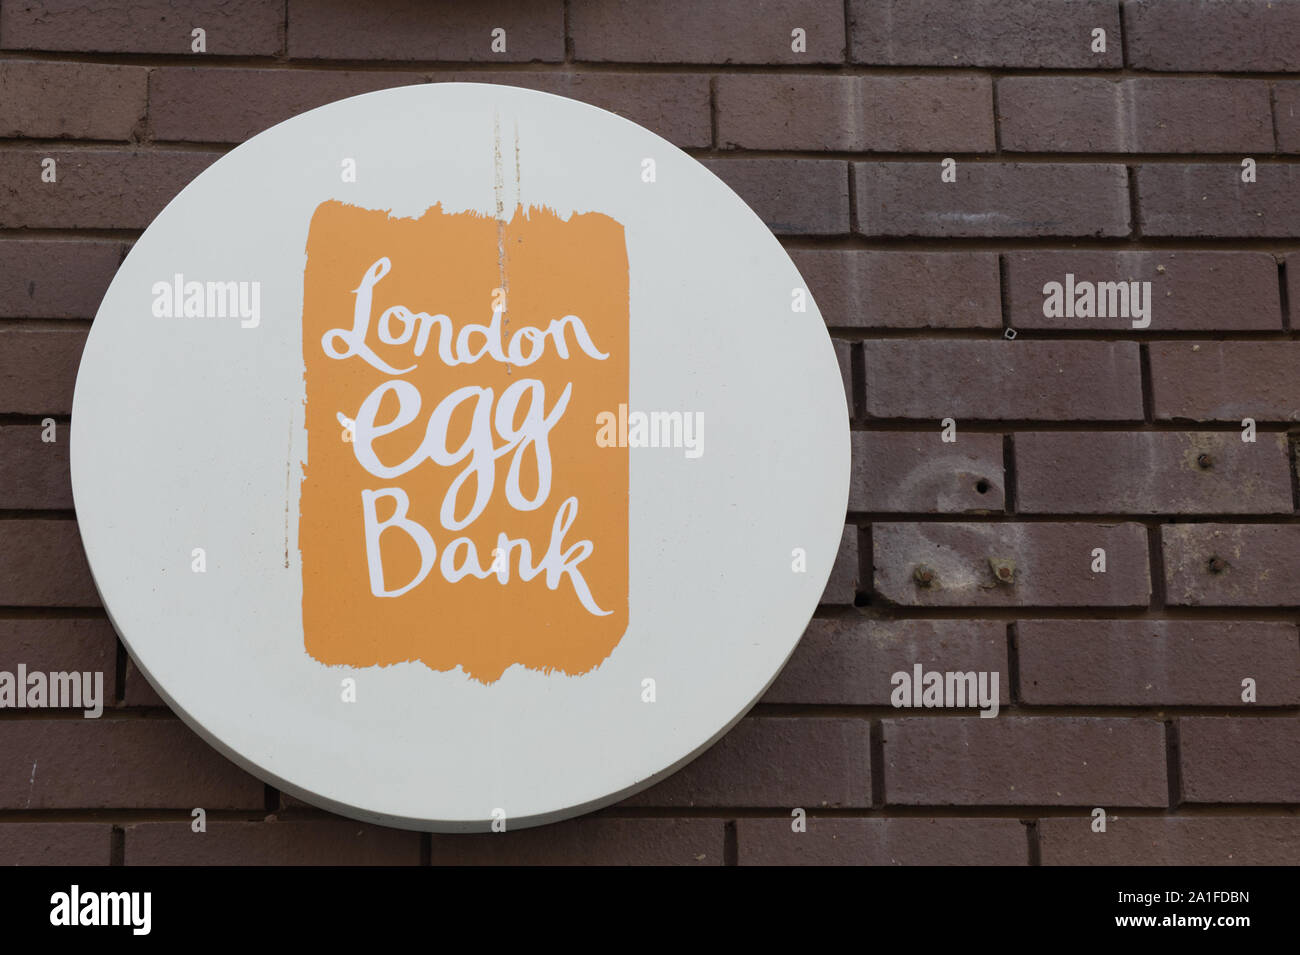 London egg bank sign Stock Photo